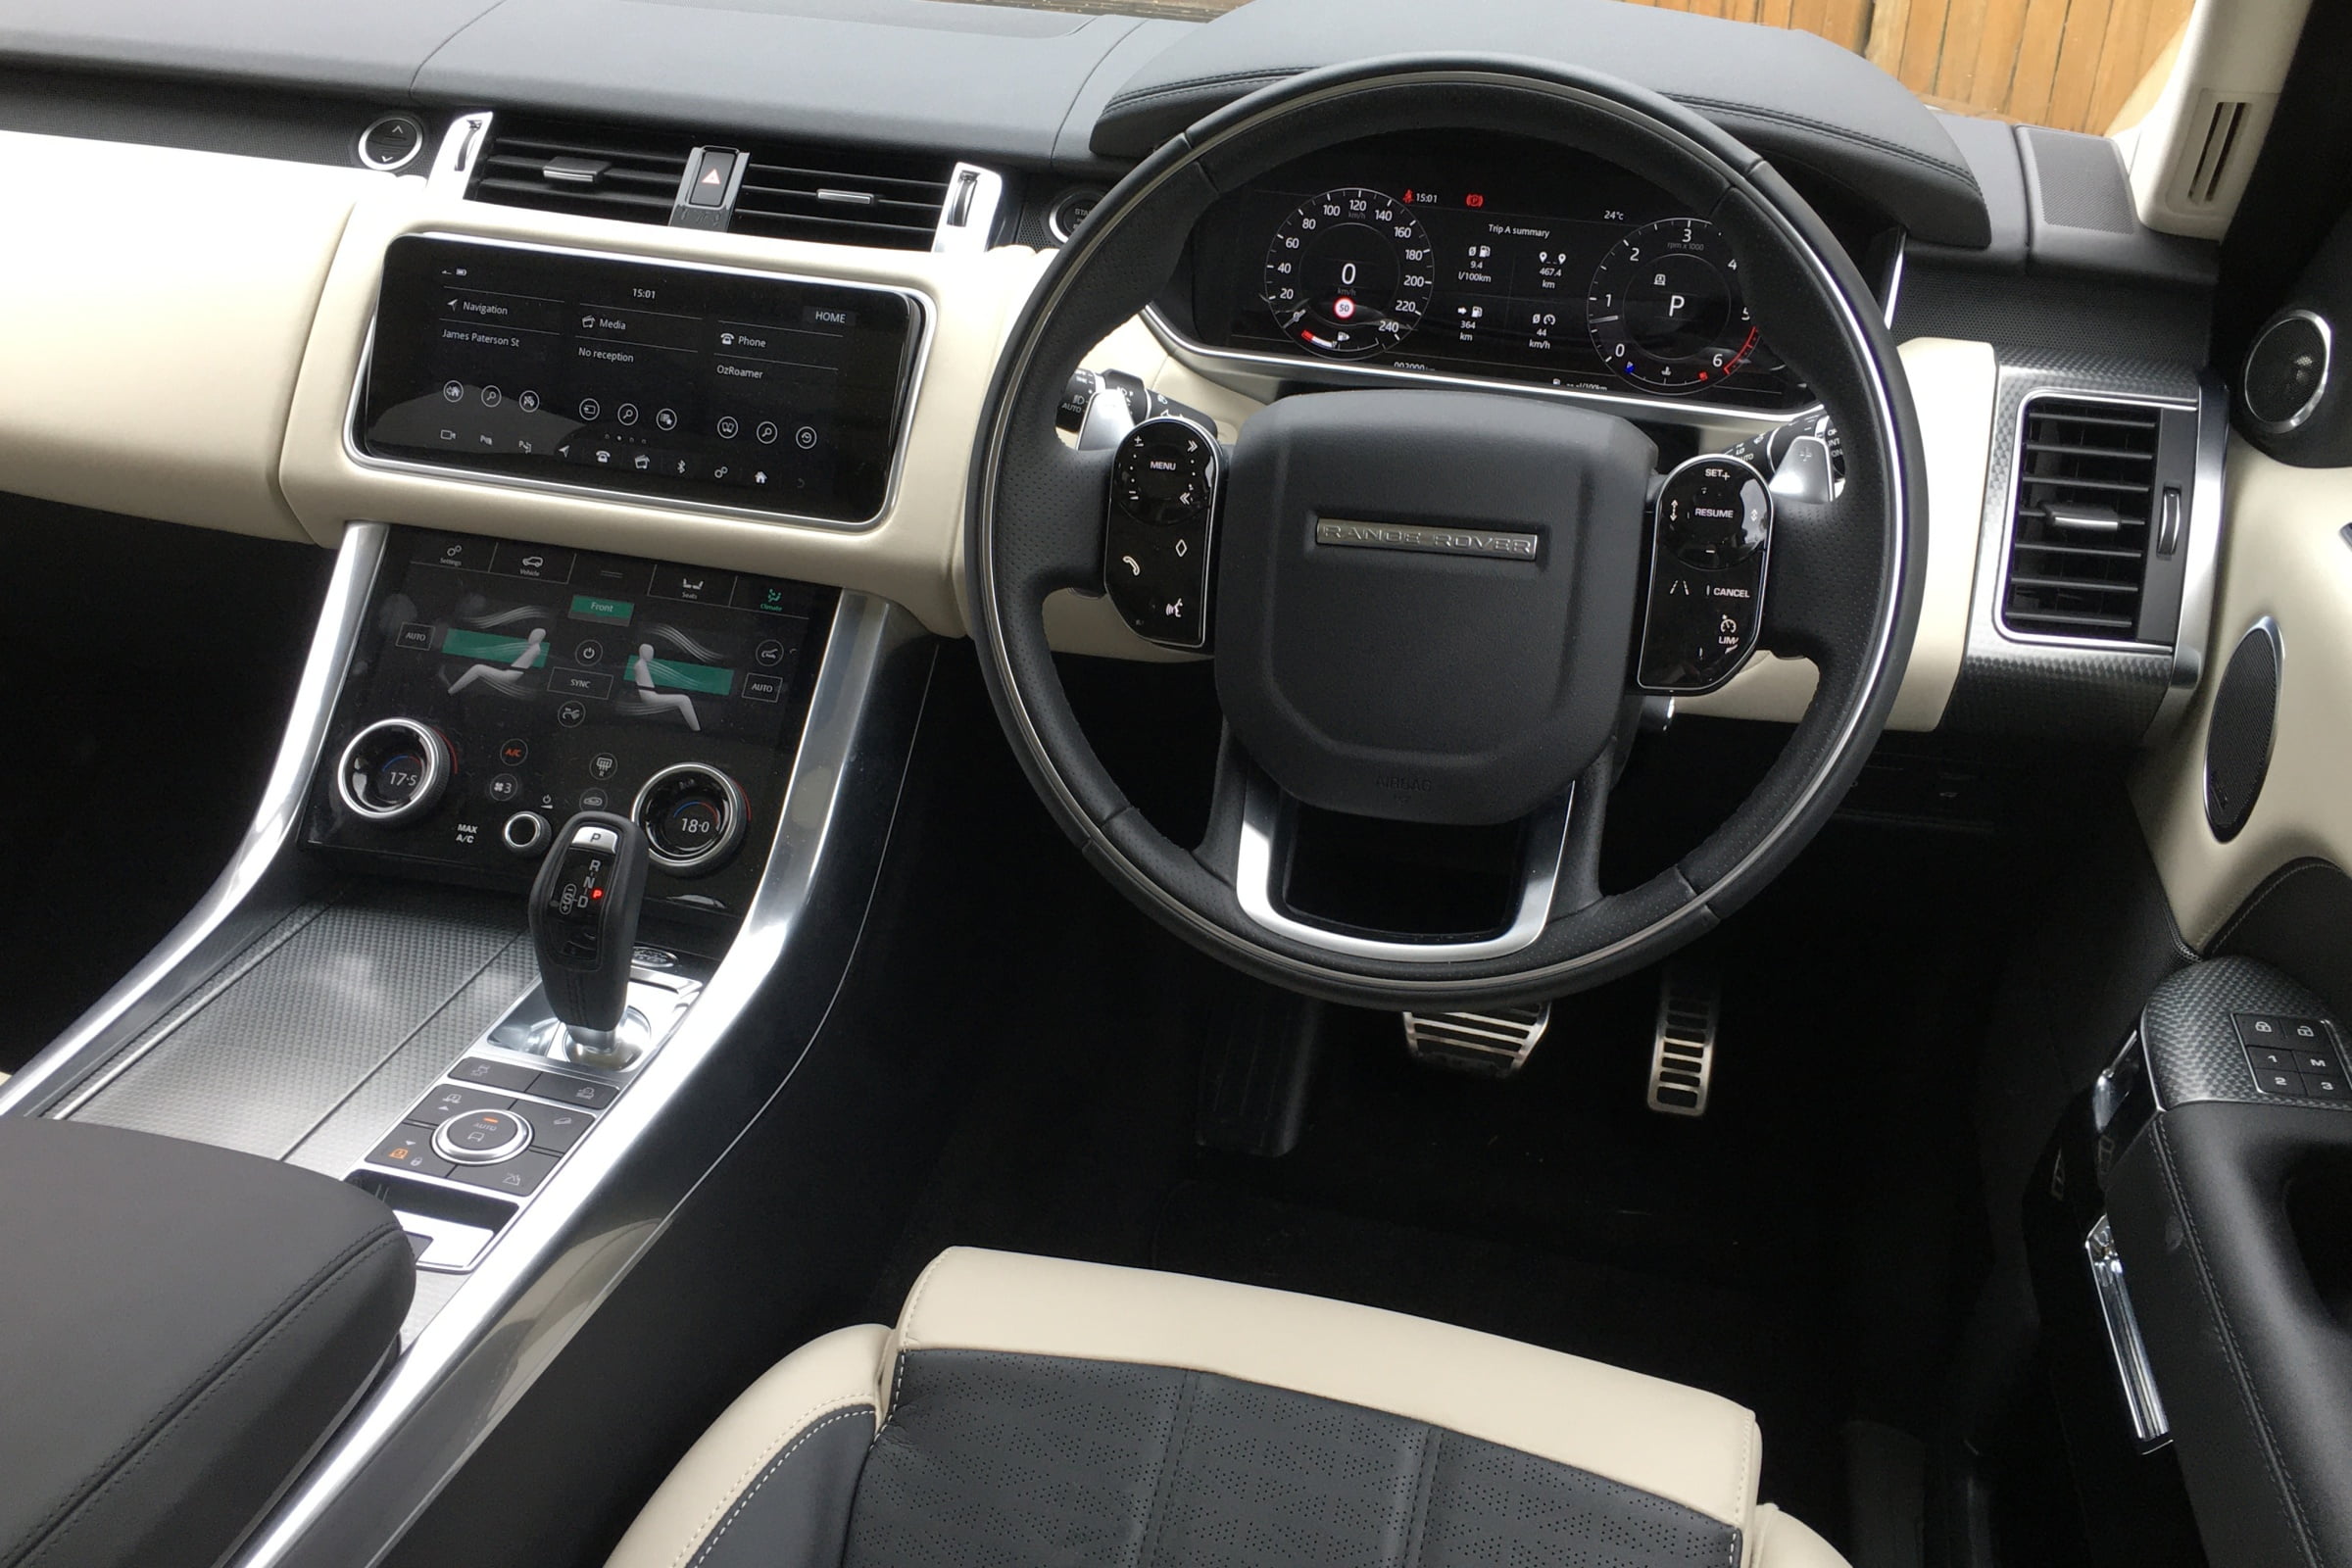 Range Rover Sport interior